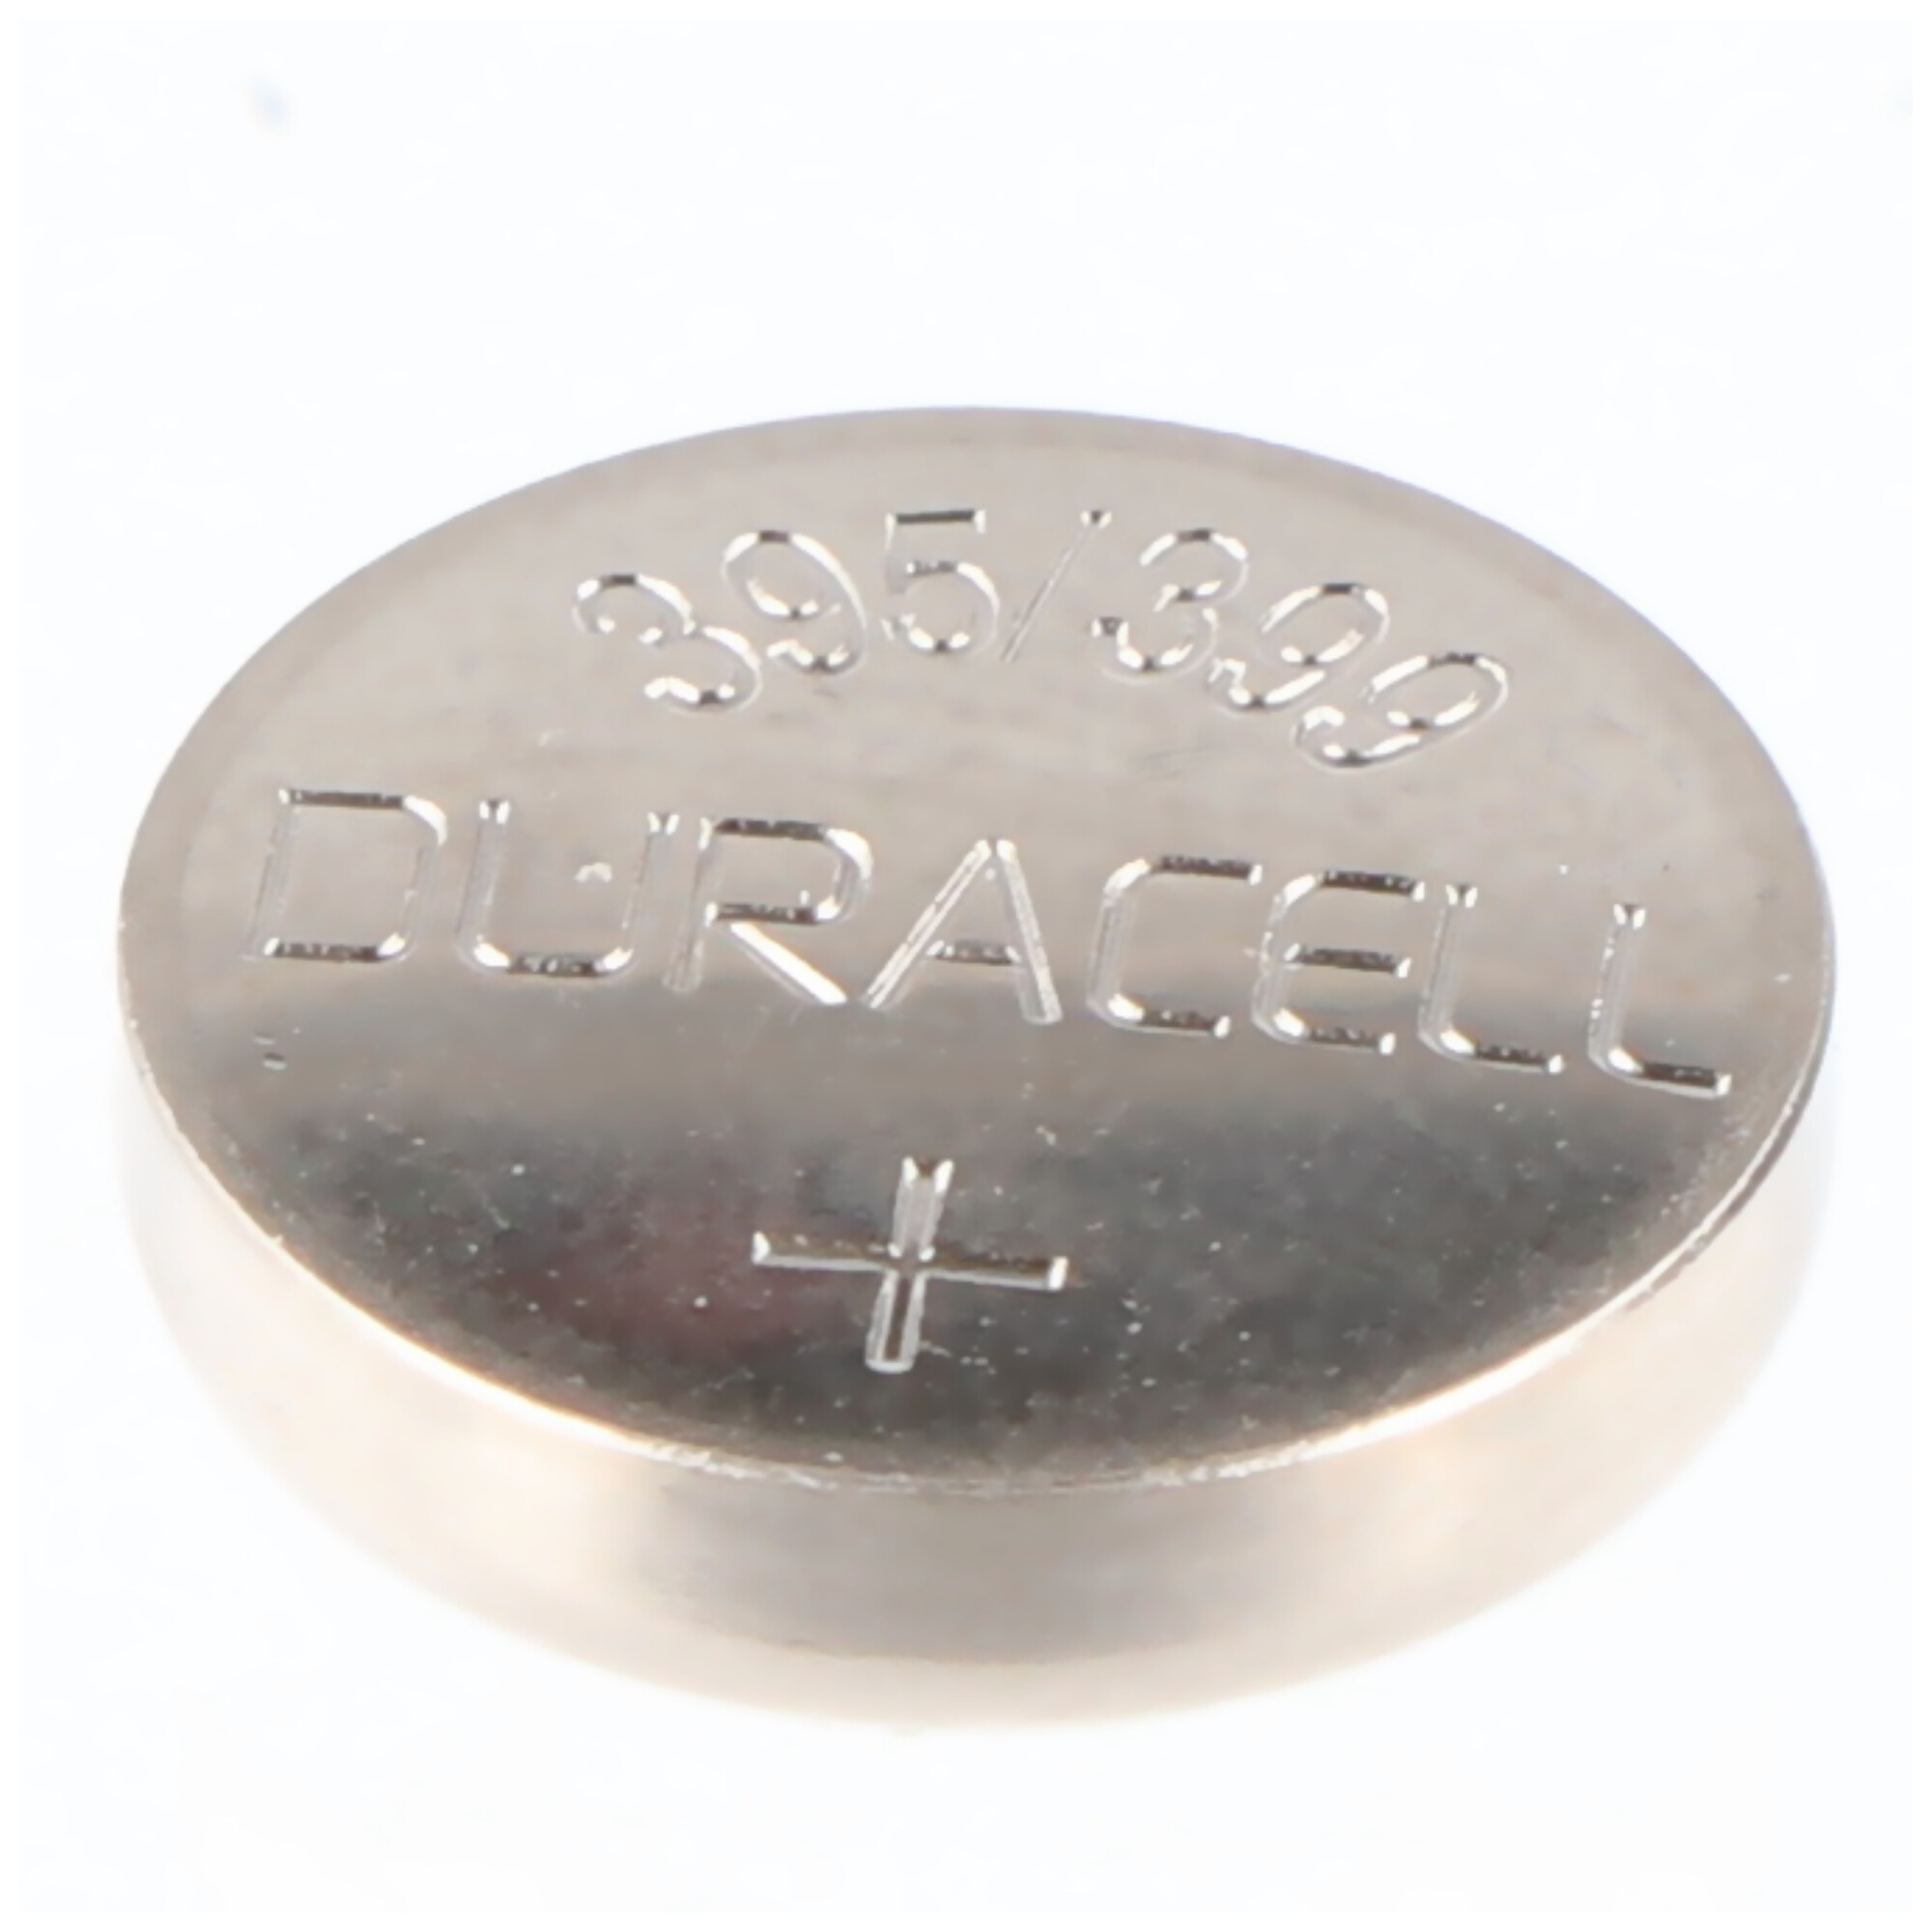 Duracell Batterie Silver Oxide, Knopfzelle, 395/399, SR57, 1.5V Watch, Retail Blister (1-Pack)